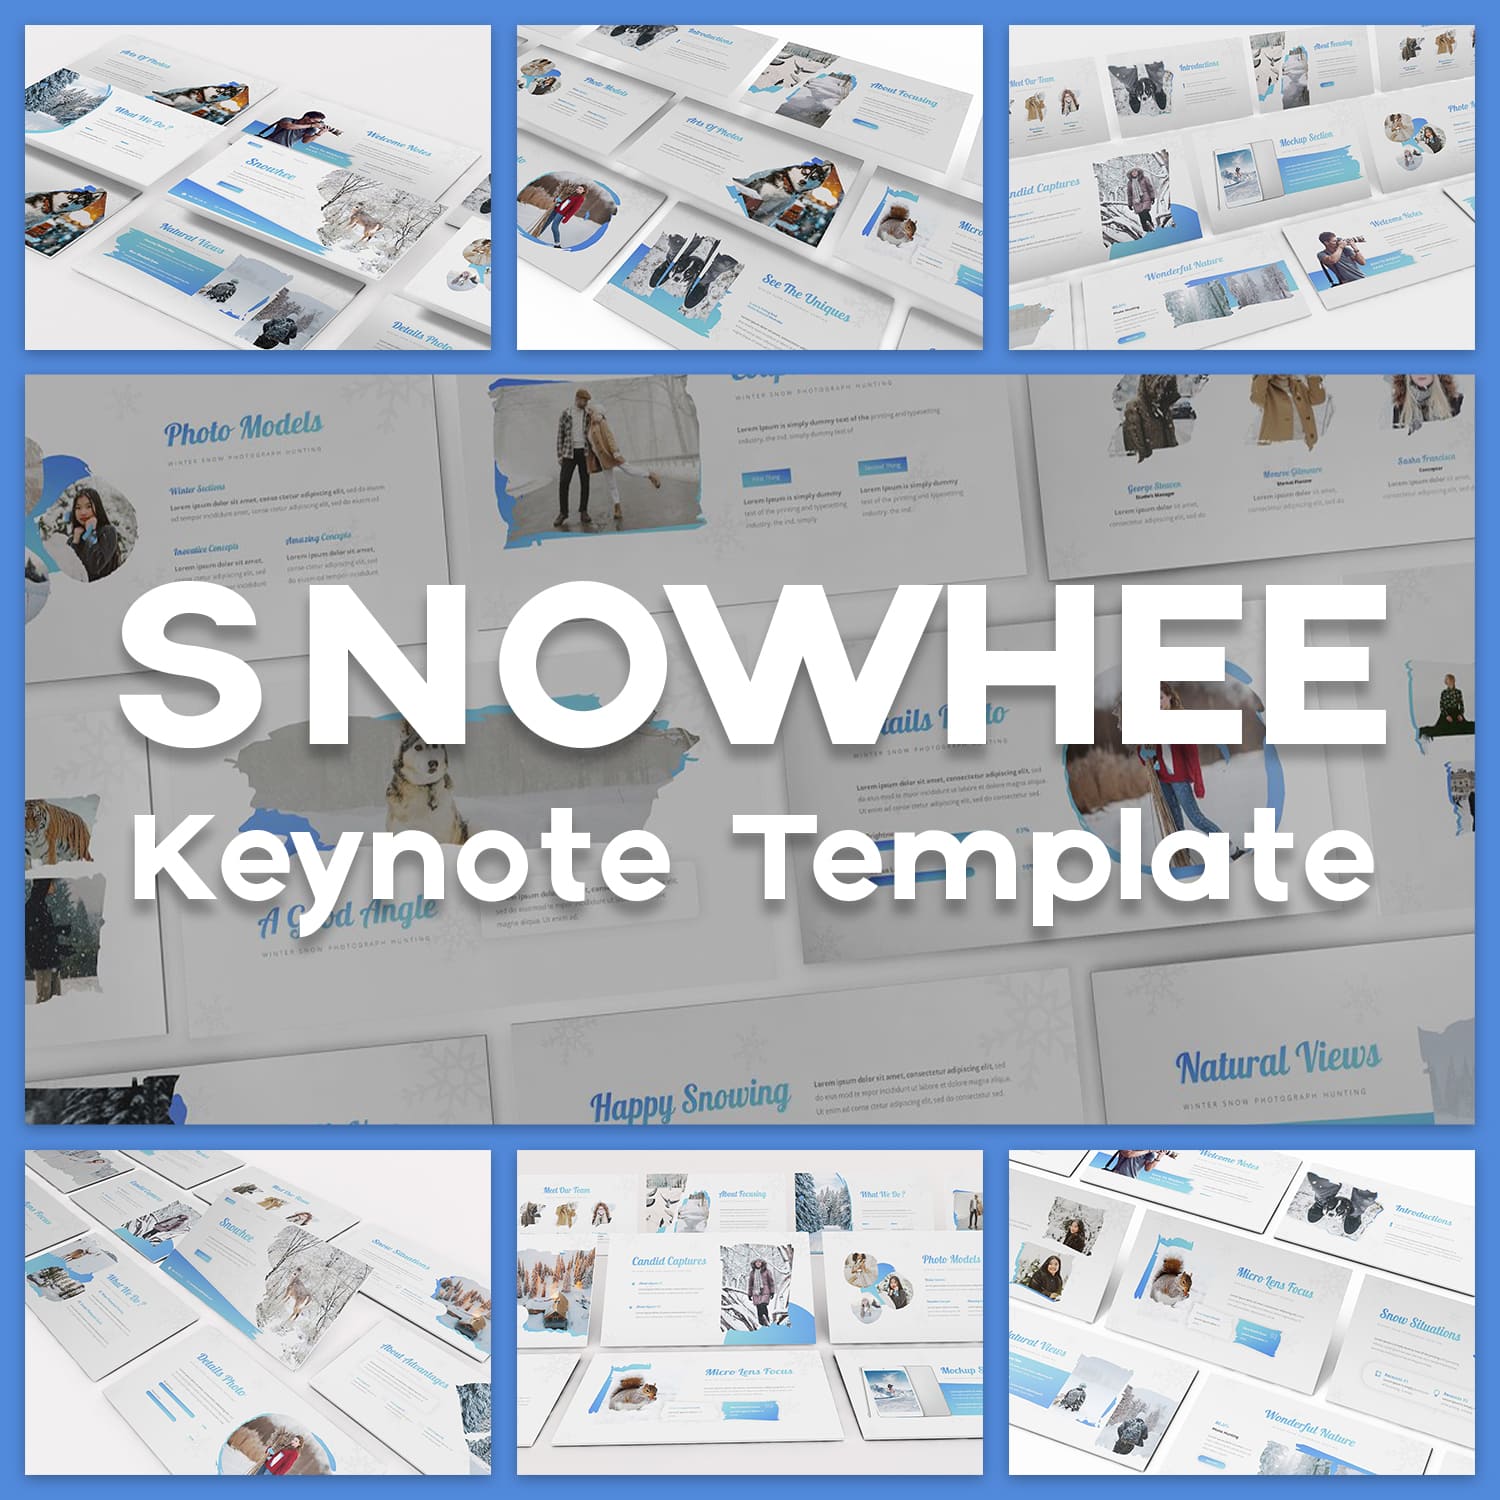 snowhee keynote template cover image.